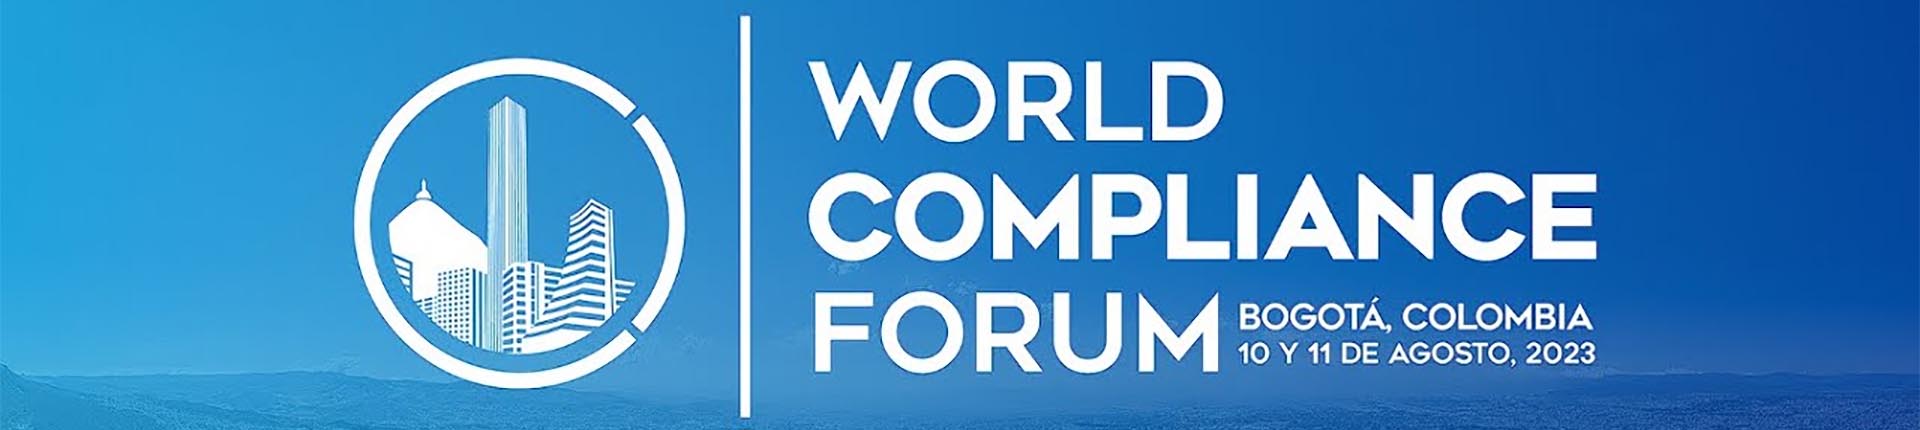 World Compliance Forum 2023 - Bogota